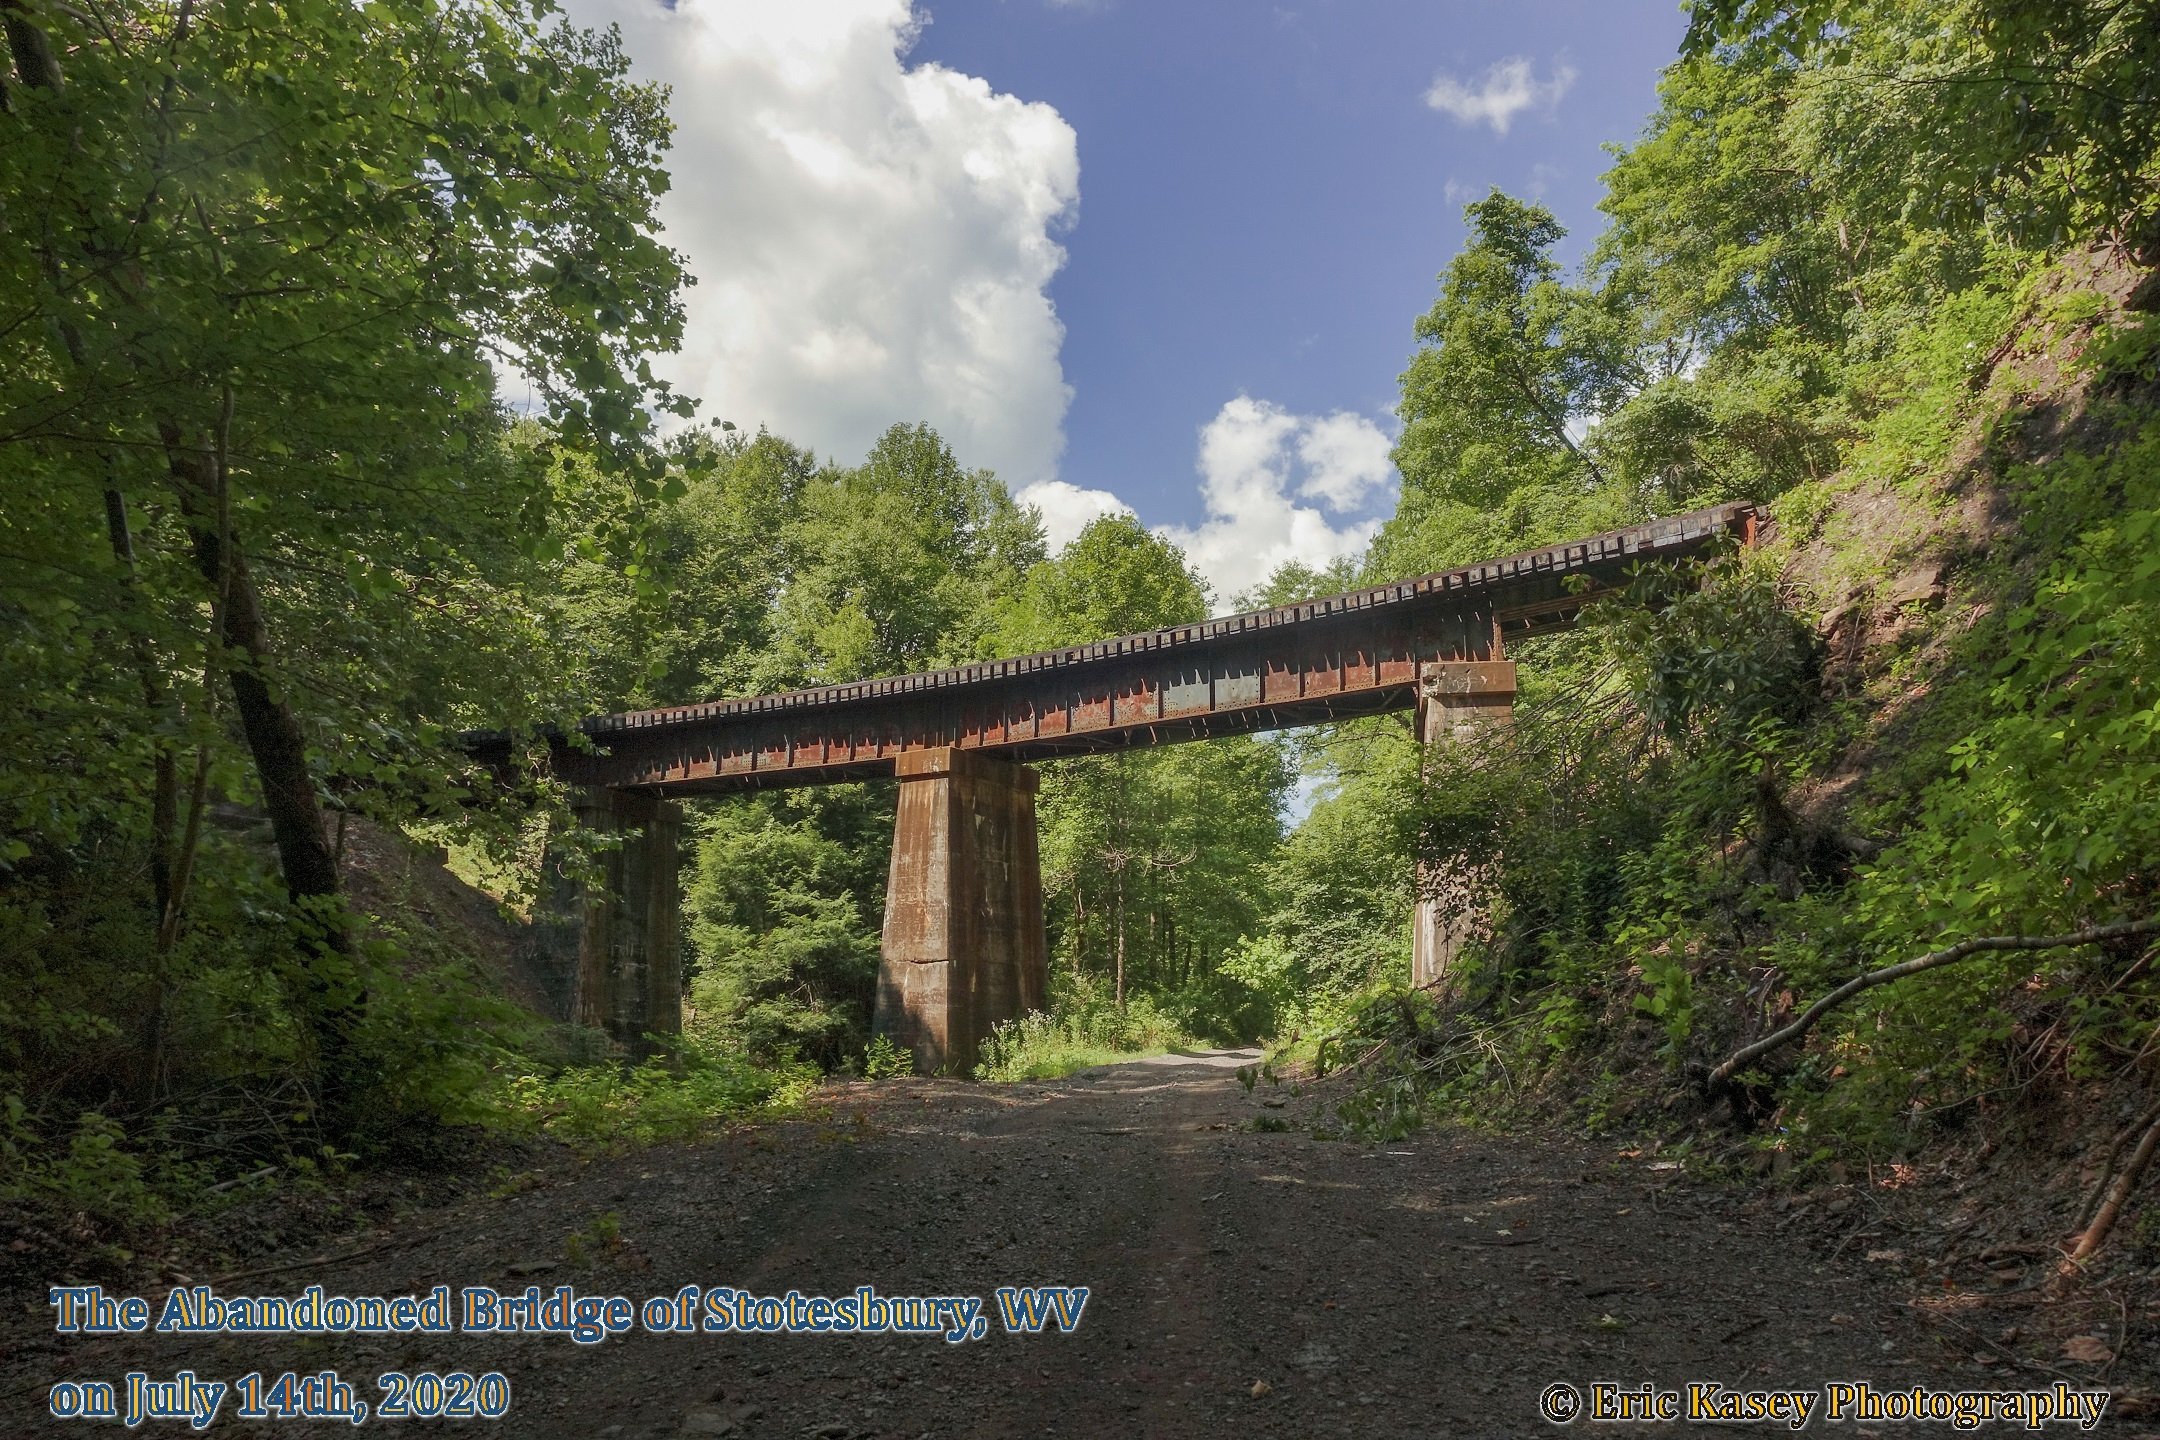 20 - The Abandoned Bridge of Stotesbury, WV on July 14th, 2020.JPG